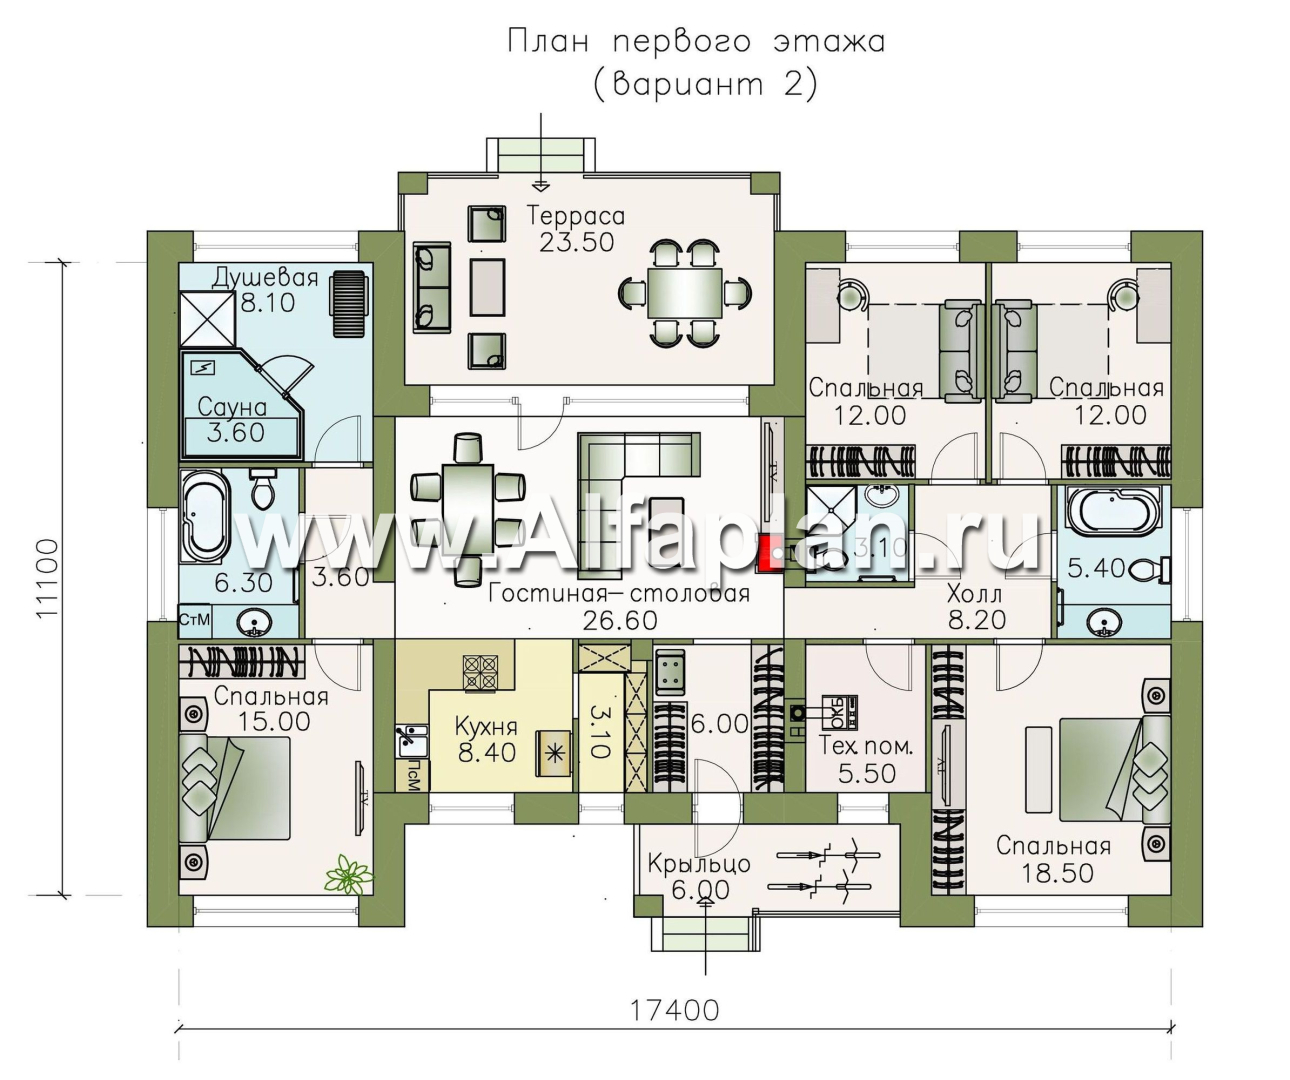 «Ангара» - проект просторного одноэтажного дома, 5 спален, планировка дома с террасой - план дома